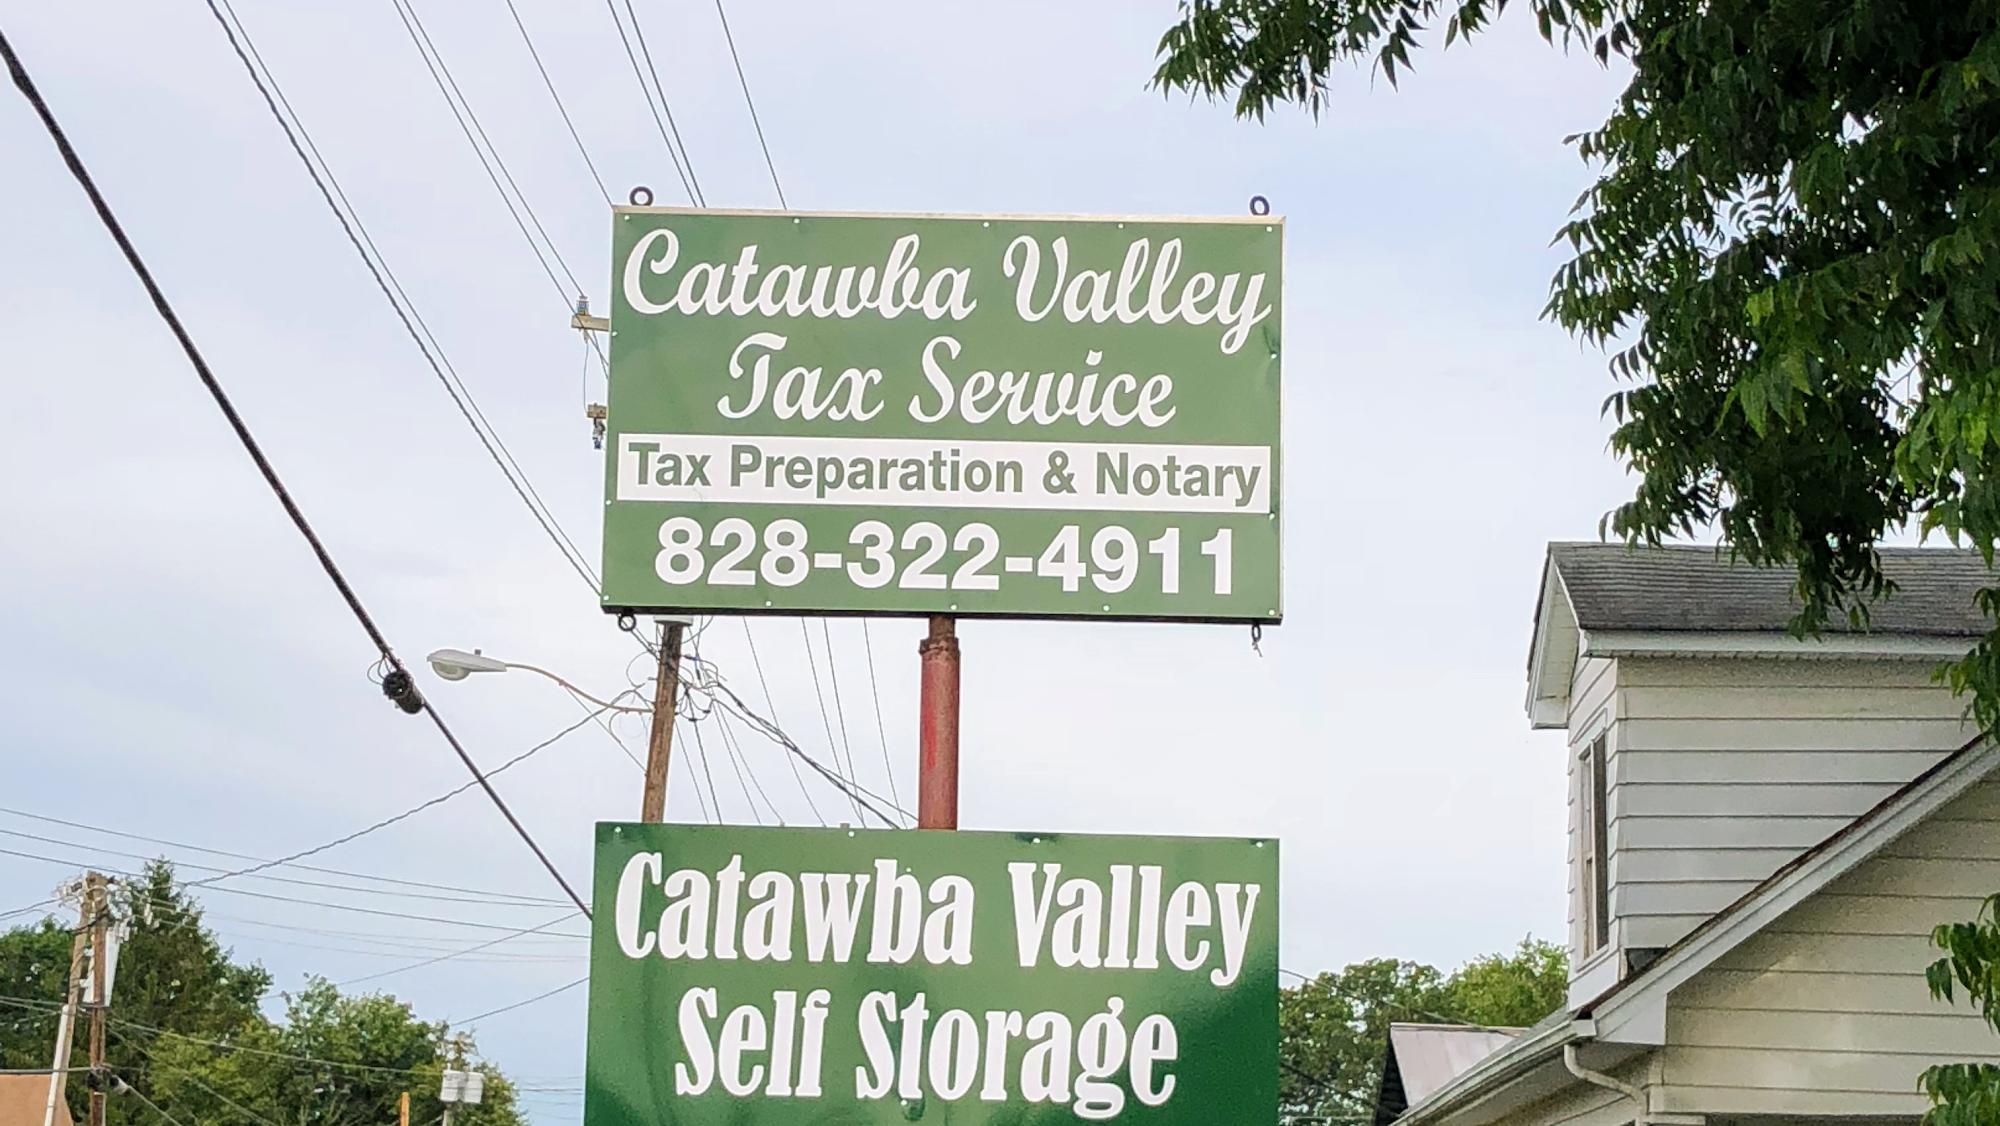 Catawba Valley Tax Service